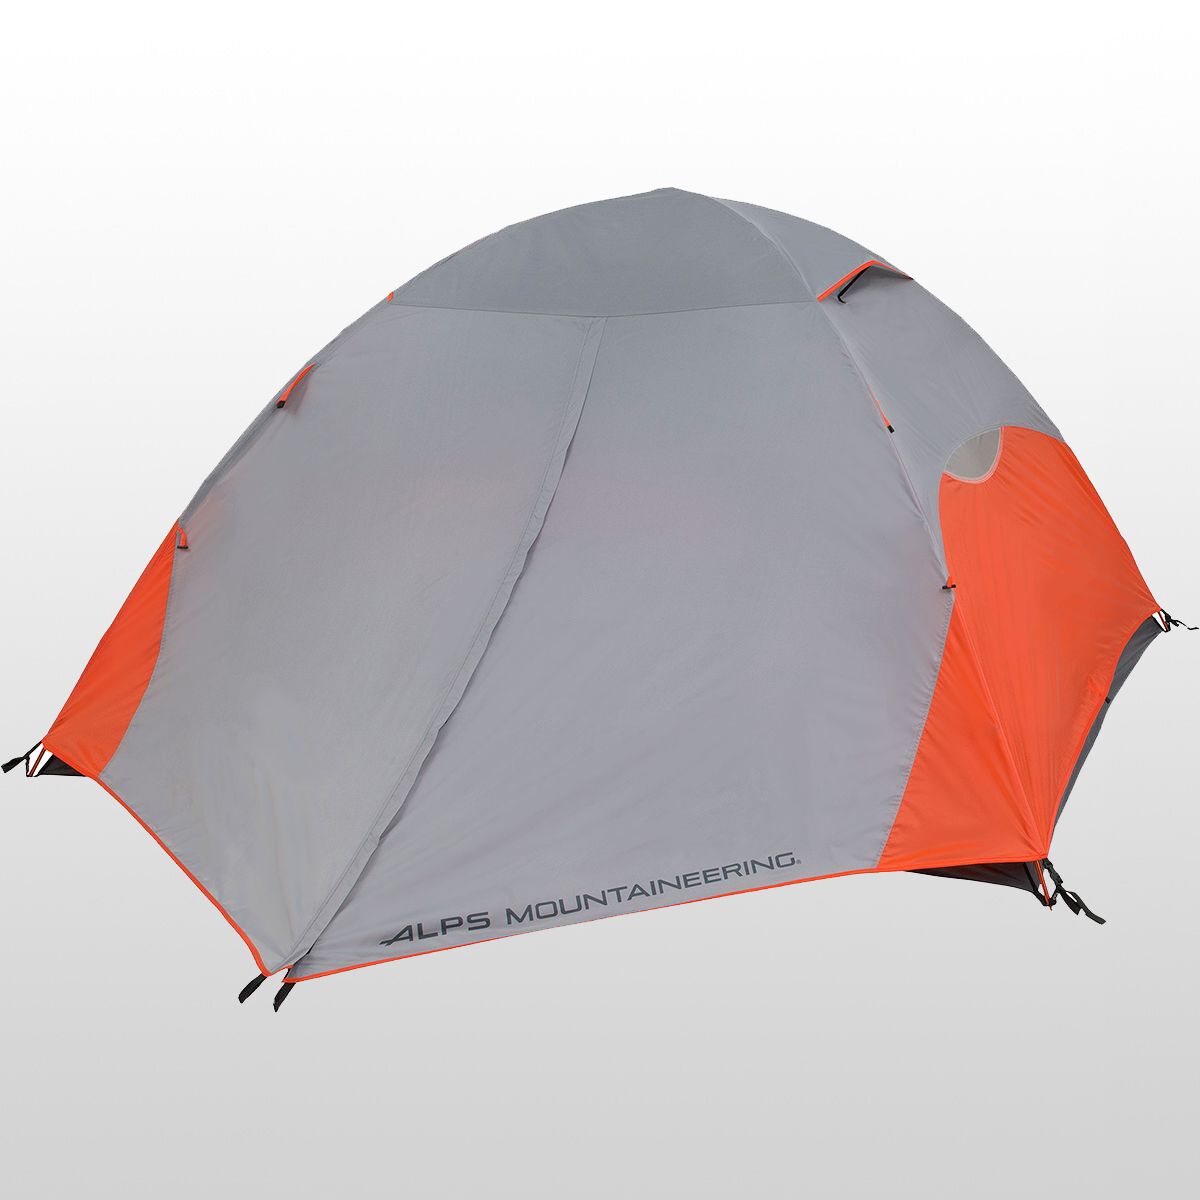  ALPS Mountaineering Koda 2 Tent: 2-Person 3-Season - Hike & Camp